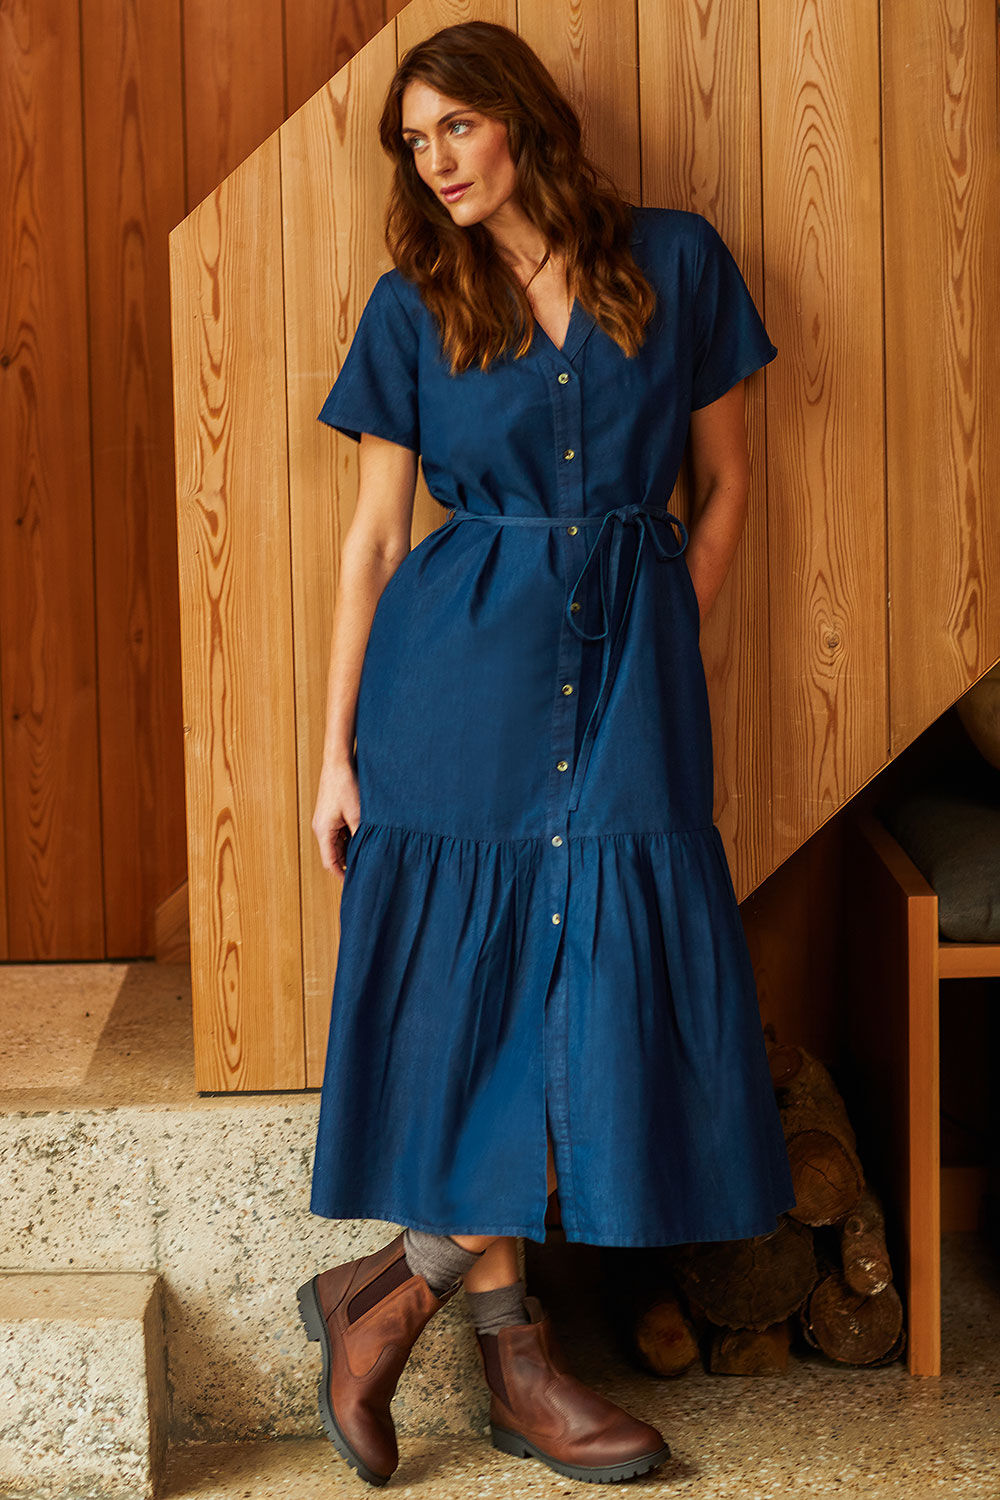 Autonomy Women’s Blue Cotton Denim Shirt Dress with Collar Neckline, Size: XL